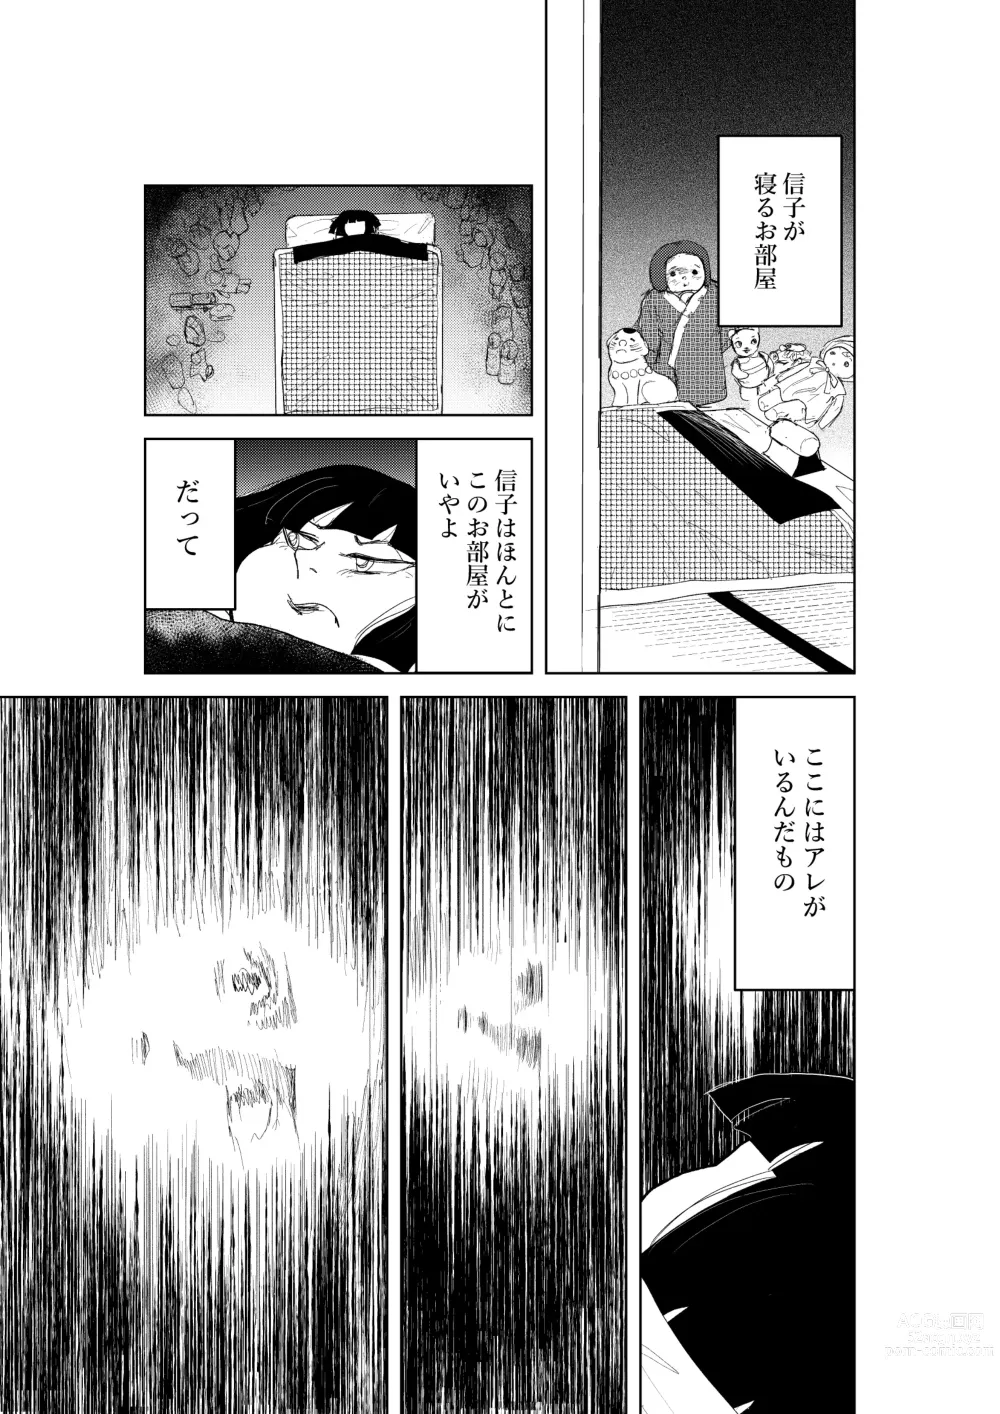 Page 7 of doujinshi Zashikiwarashi